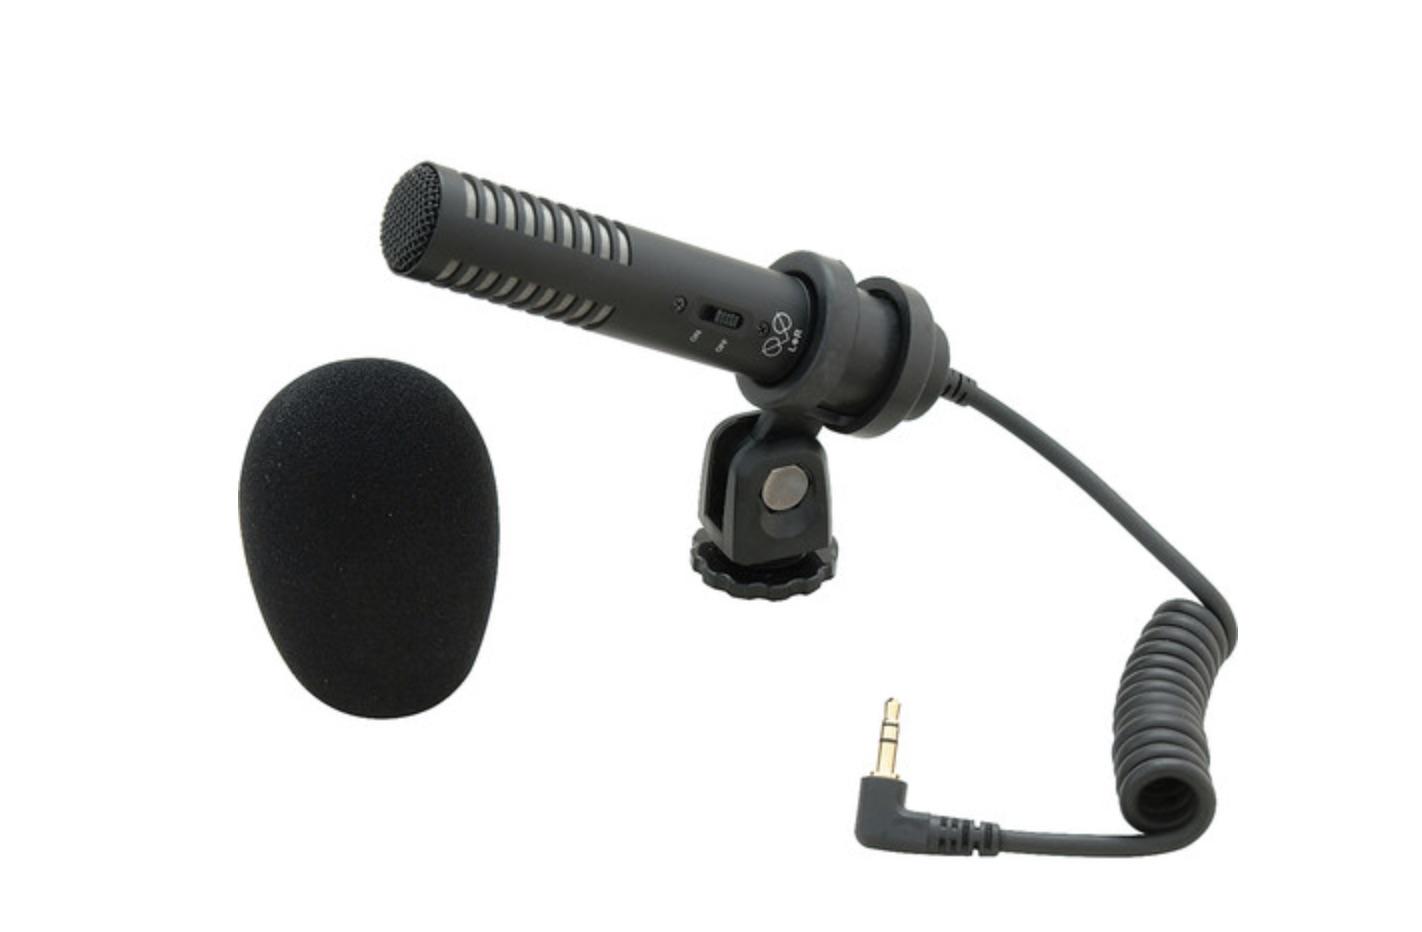 https://thedigitalstory.com/2020/08/02/audio-technica-condenser-mic.jpg